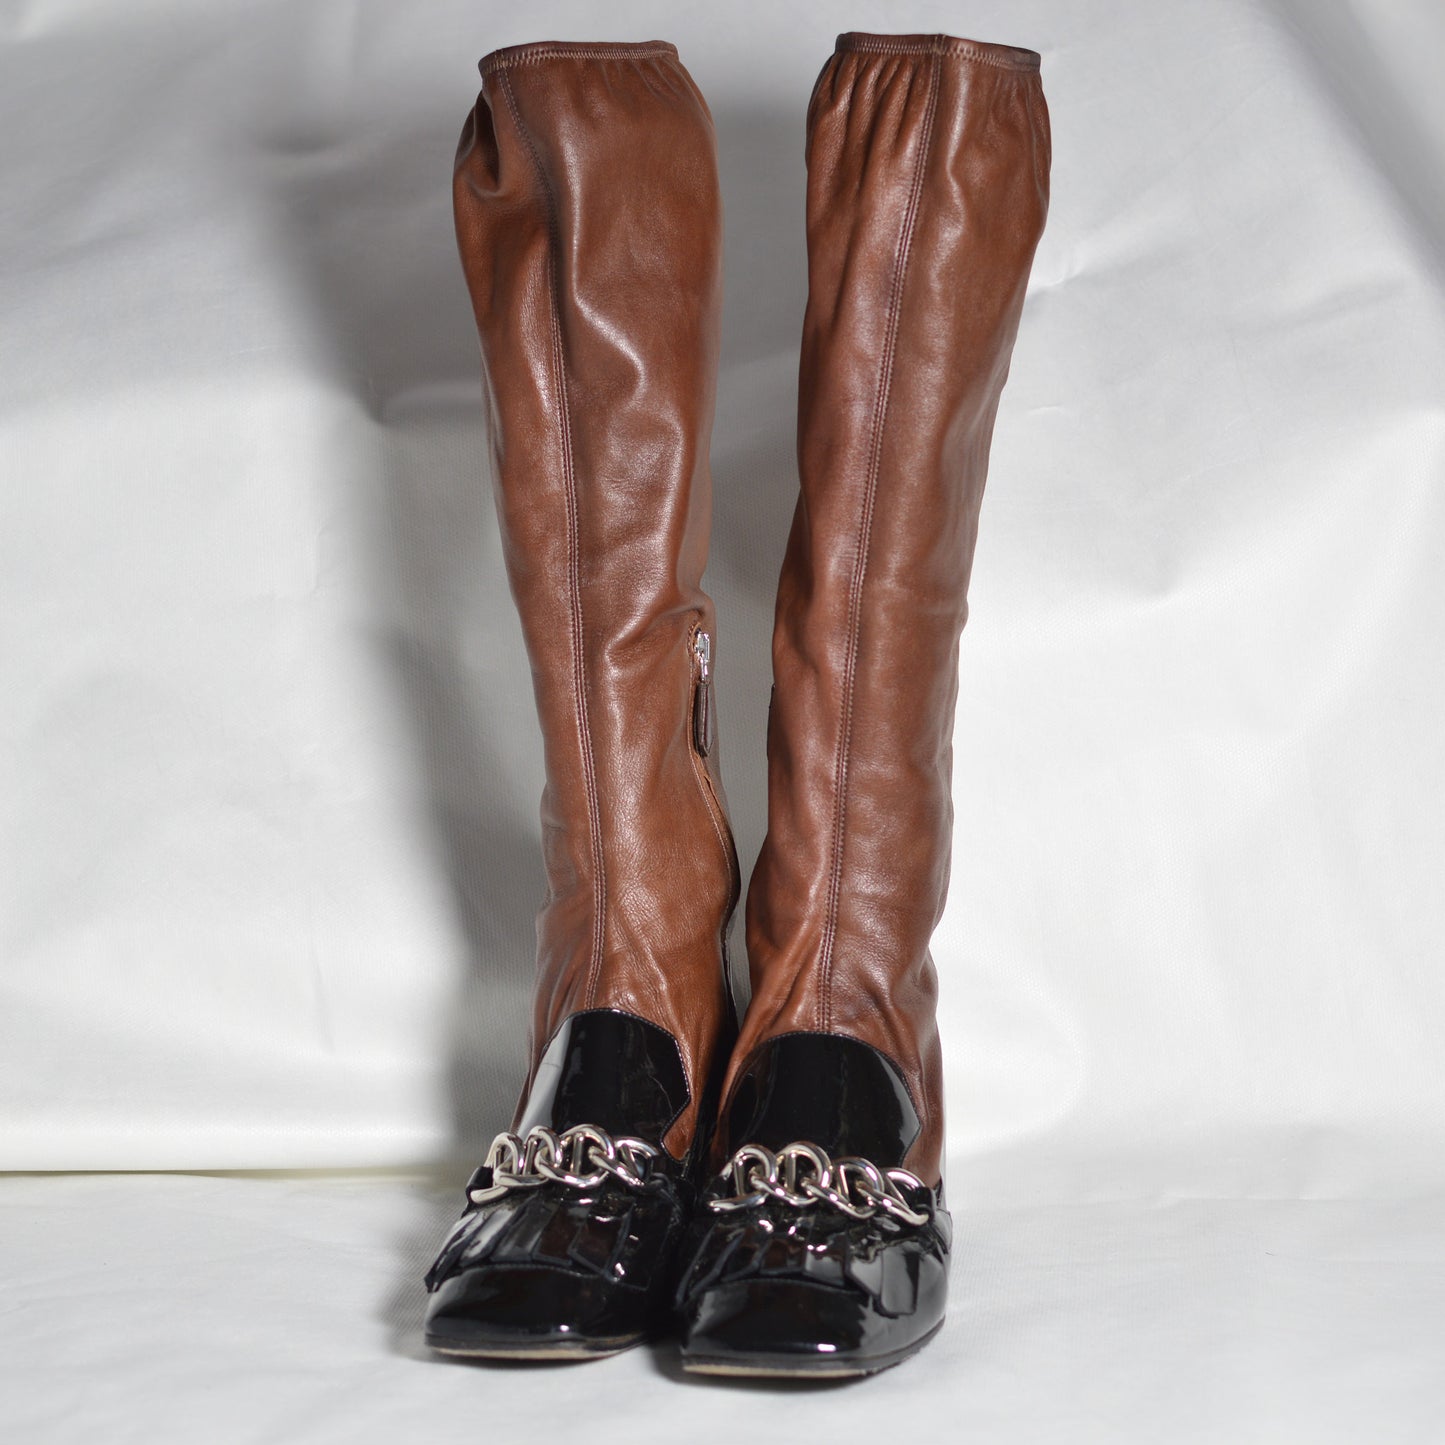 Prada - High Leather Boots